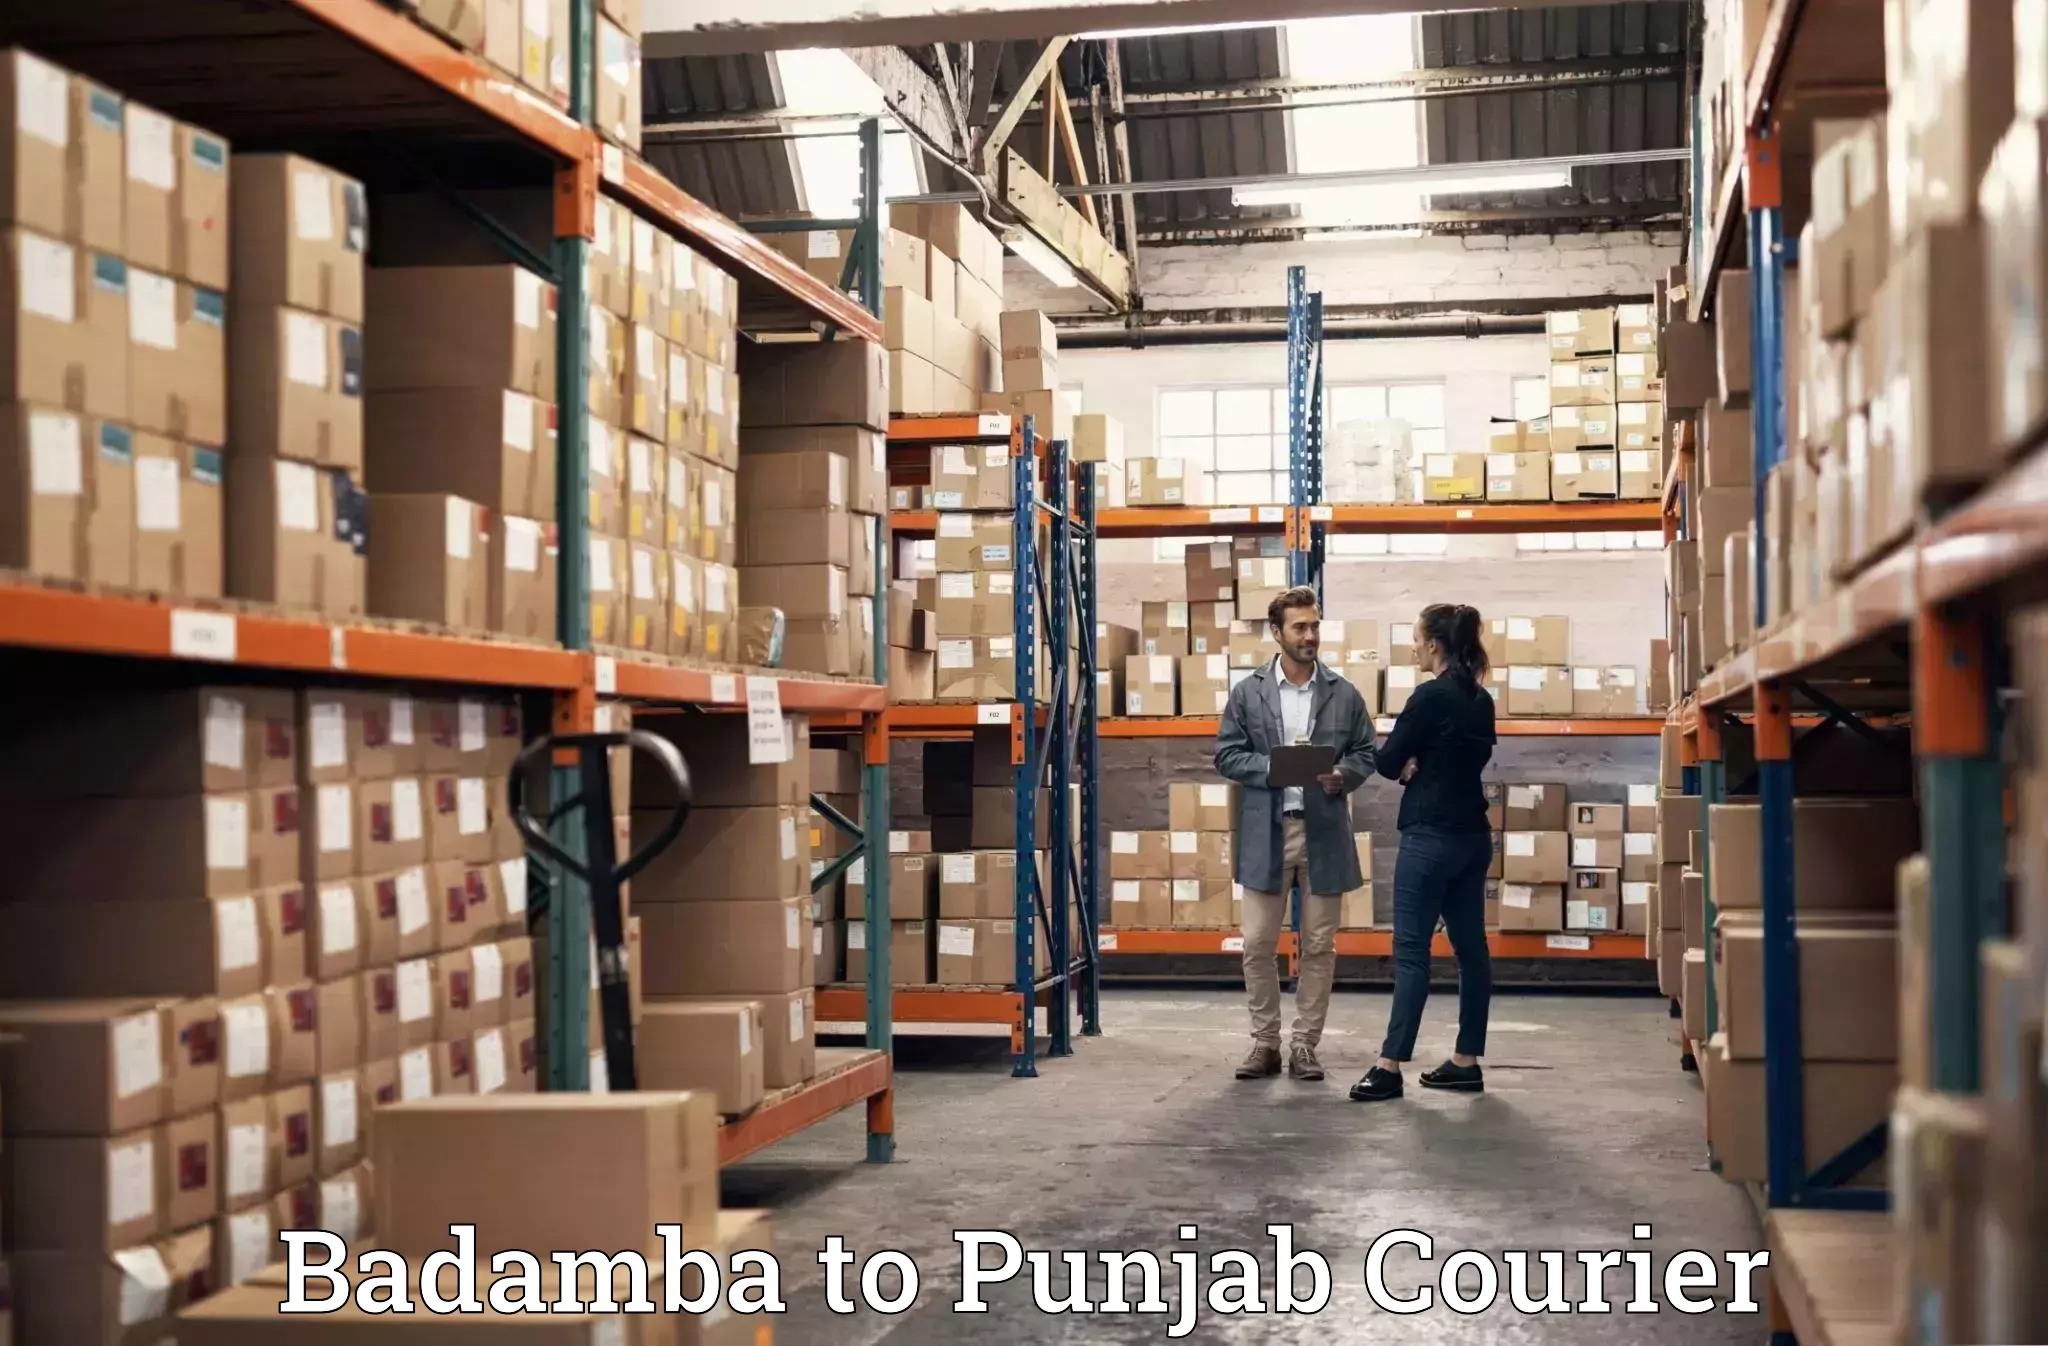 Professional movers and packers Badamba to Ajnala